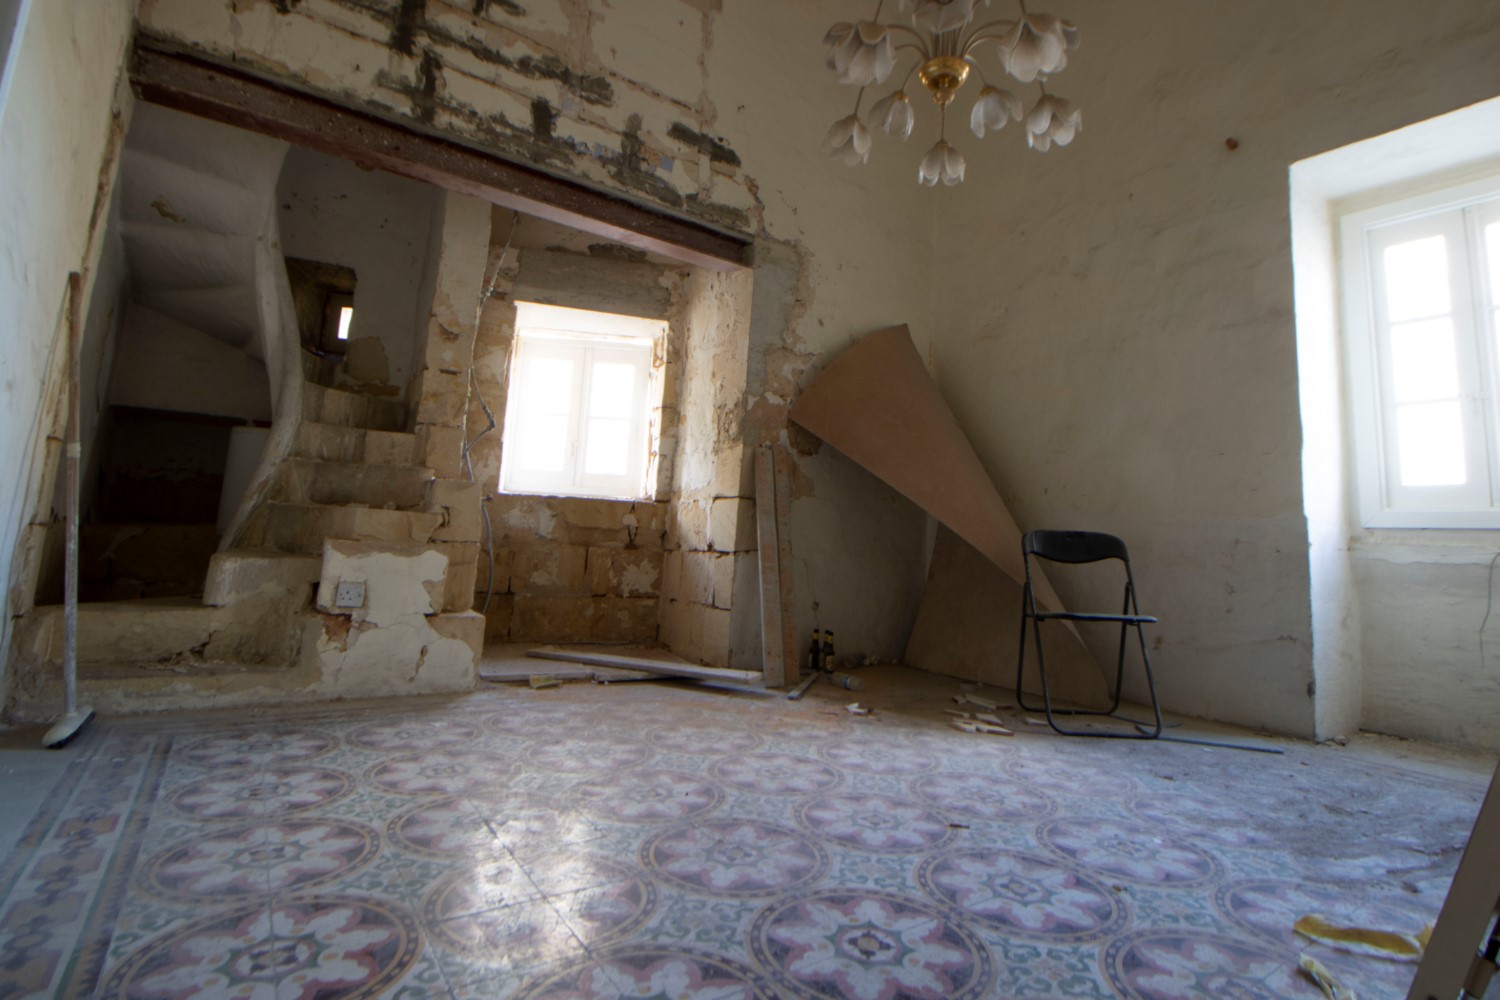 Bedroom - Unconverted House of Character in Birkirkara